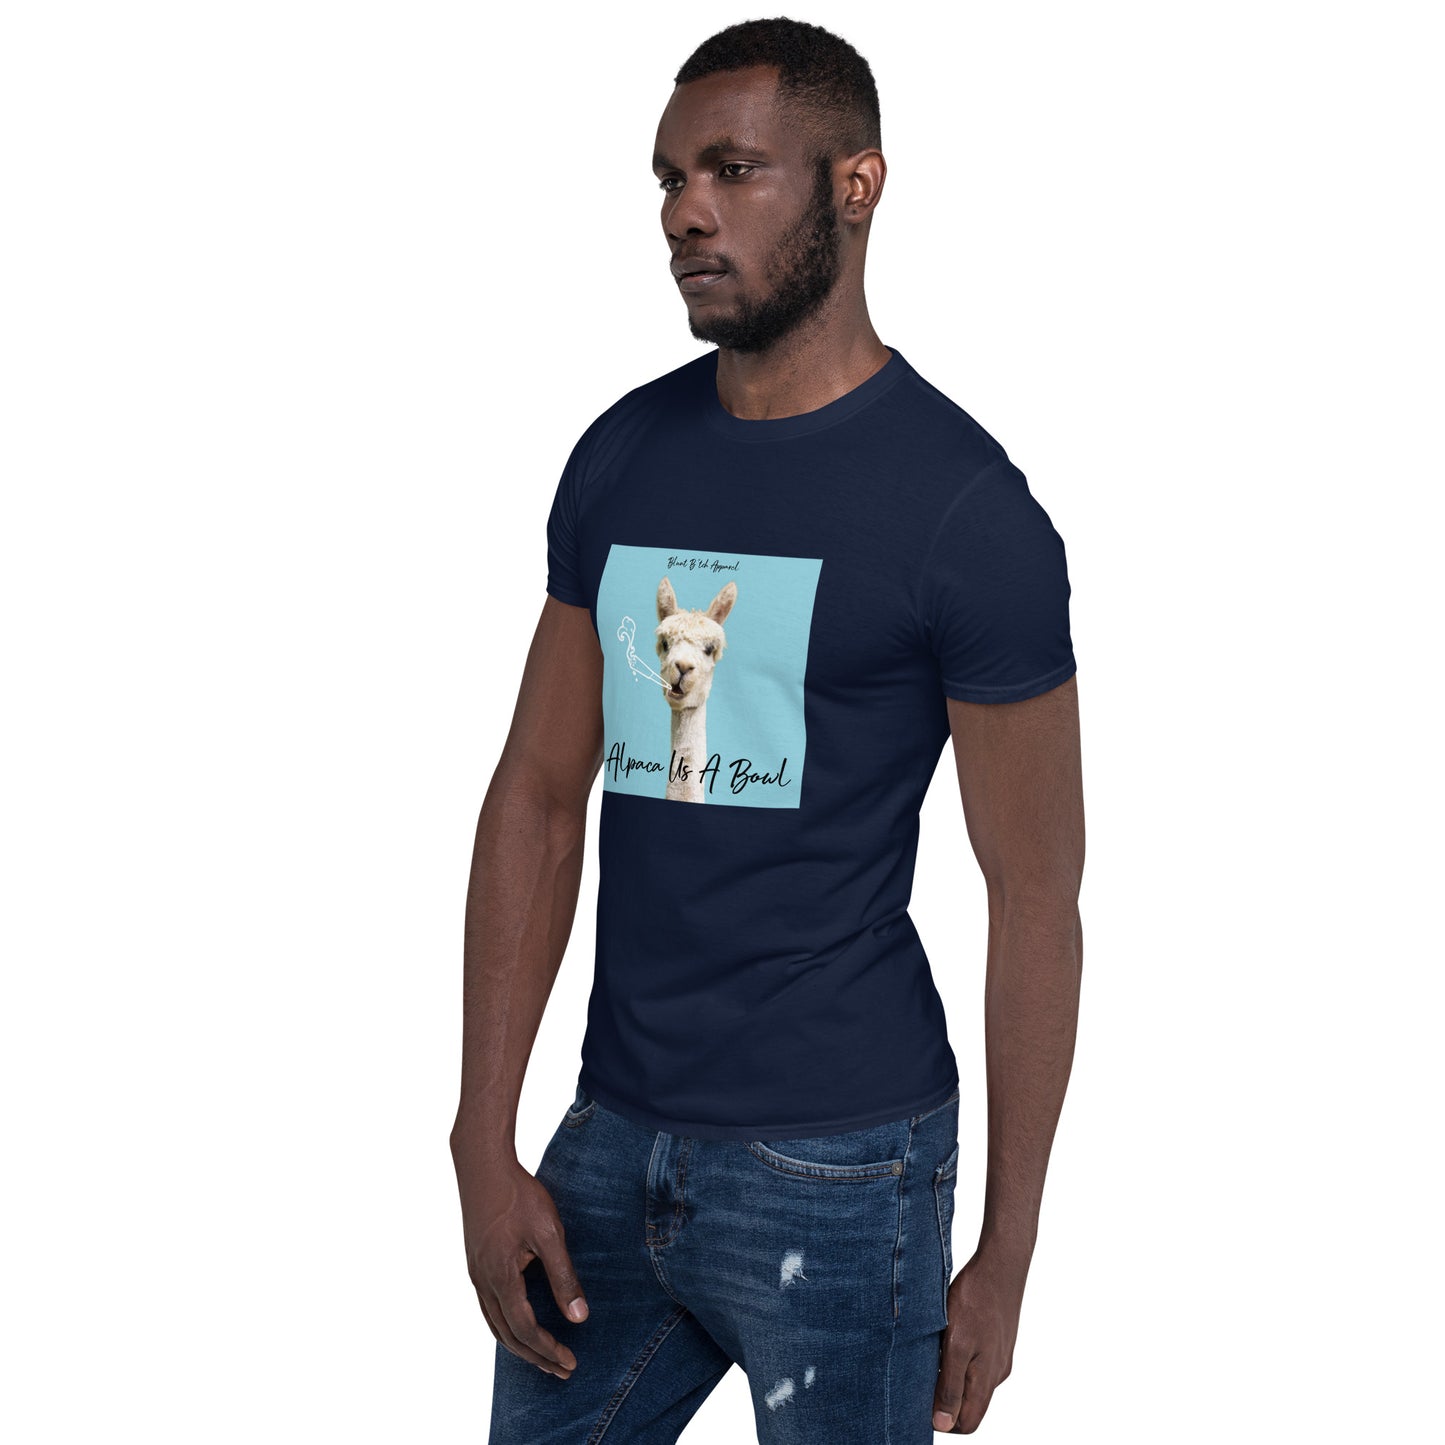 Short-Sleeve Unisex T-Shirt Alpaca Us A Bowl 420 Funny Shirt